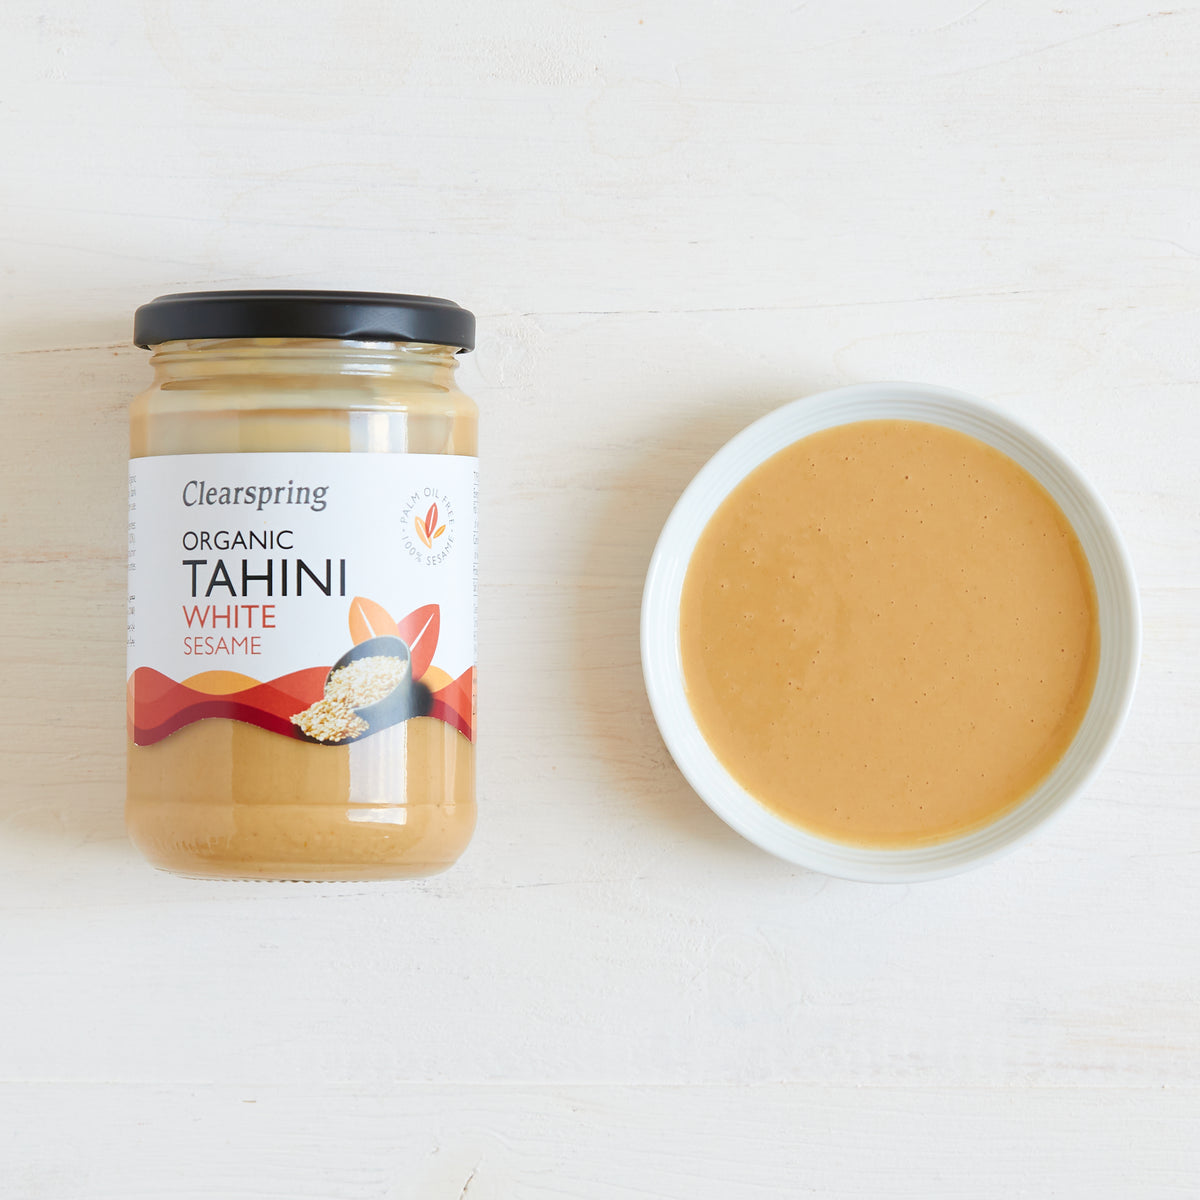 Clearspring Organic Tahini - White Sesame